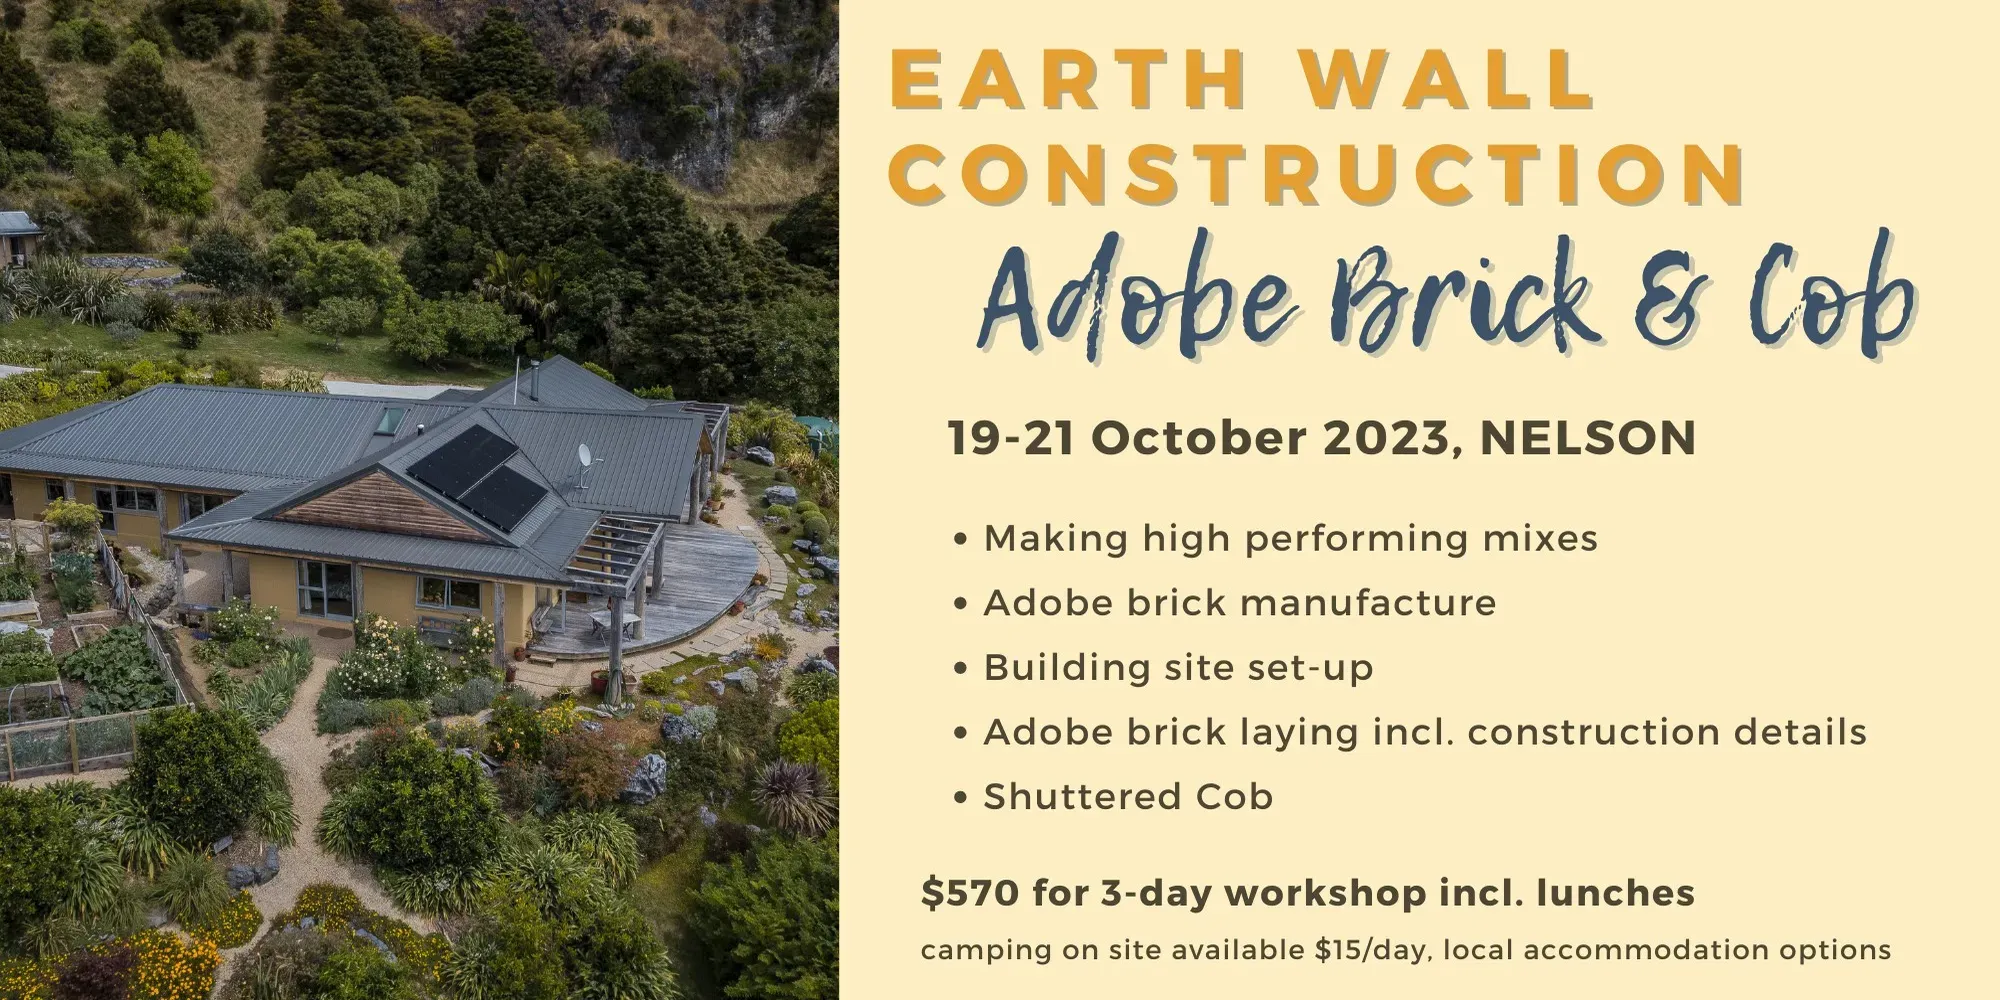 Adobe and Cob Construction Workshop